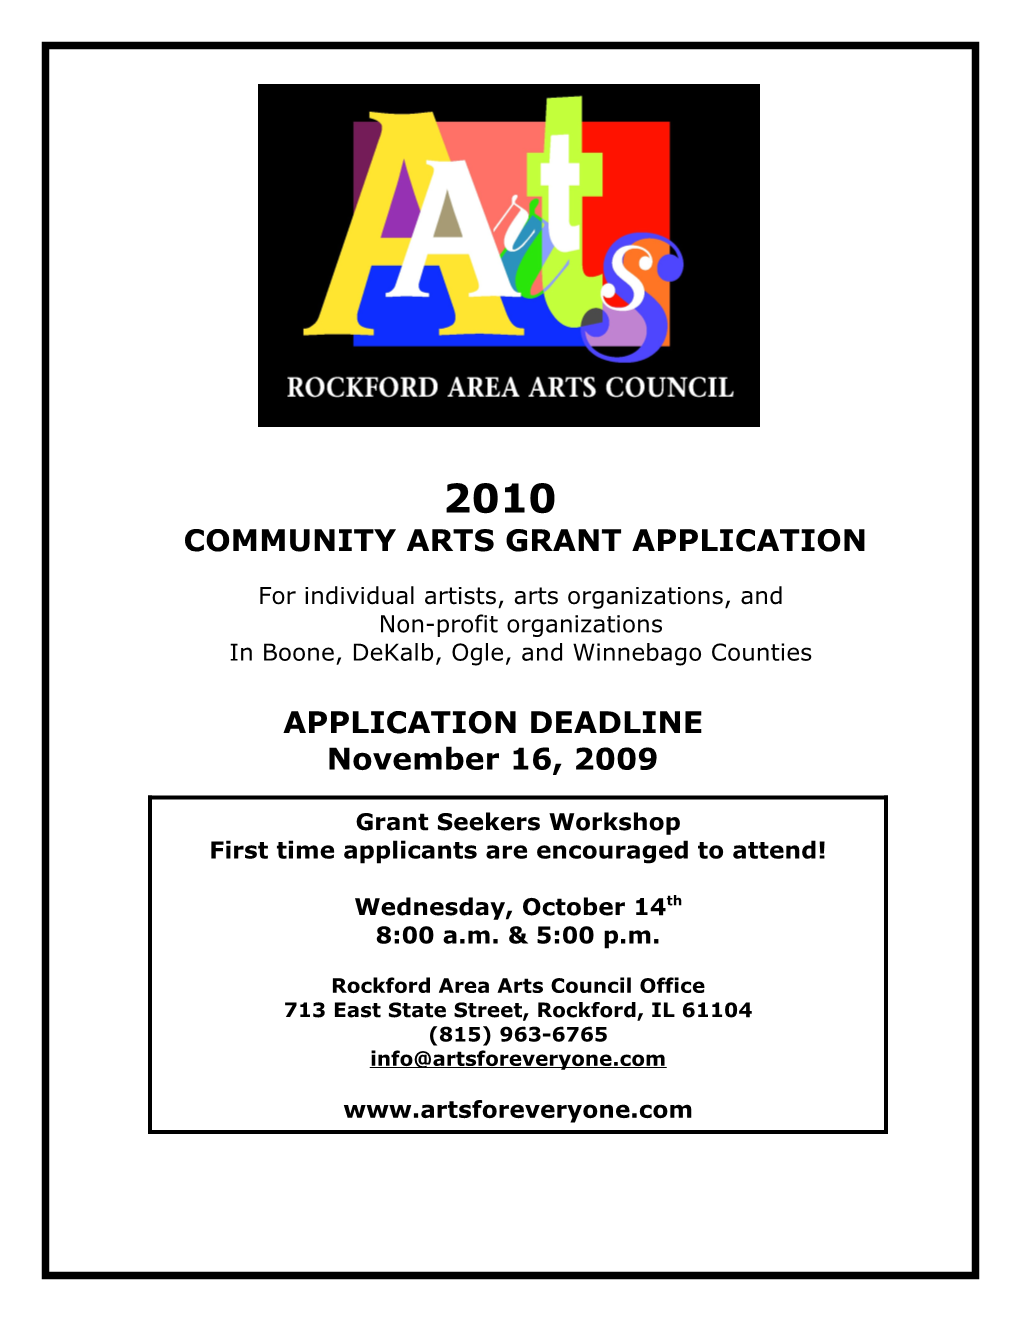 Community Arts Grant Application